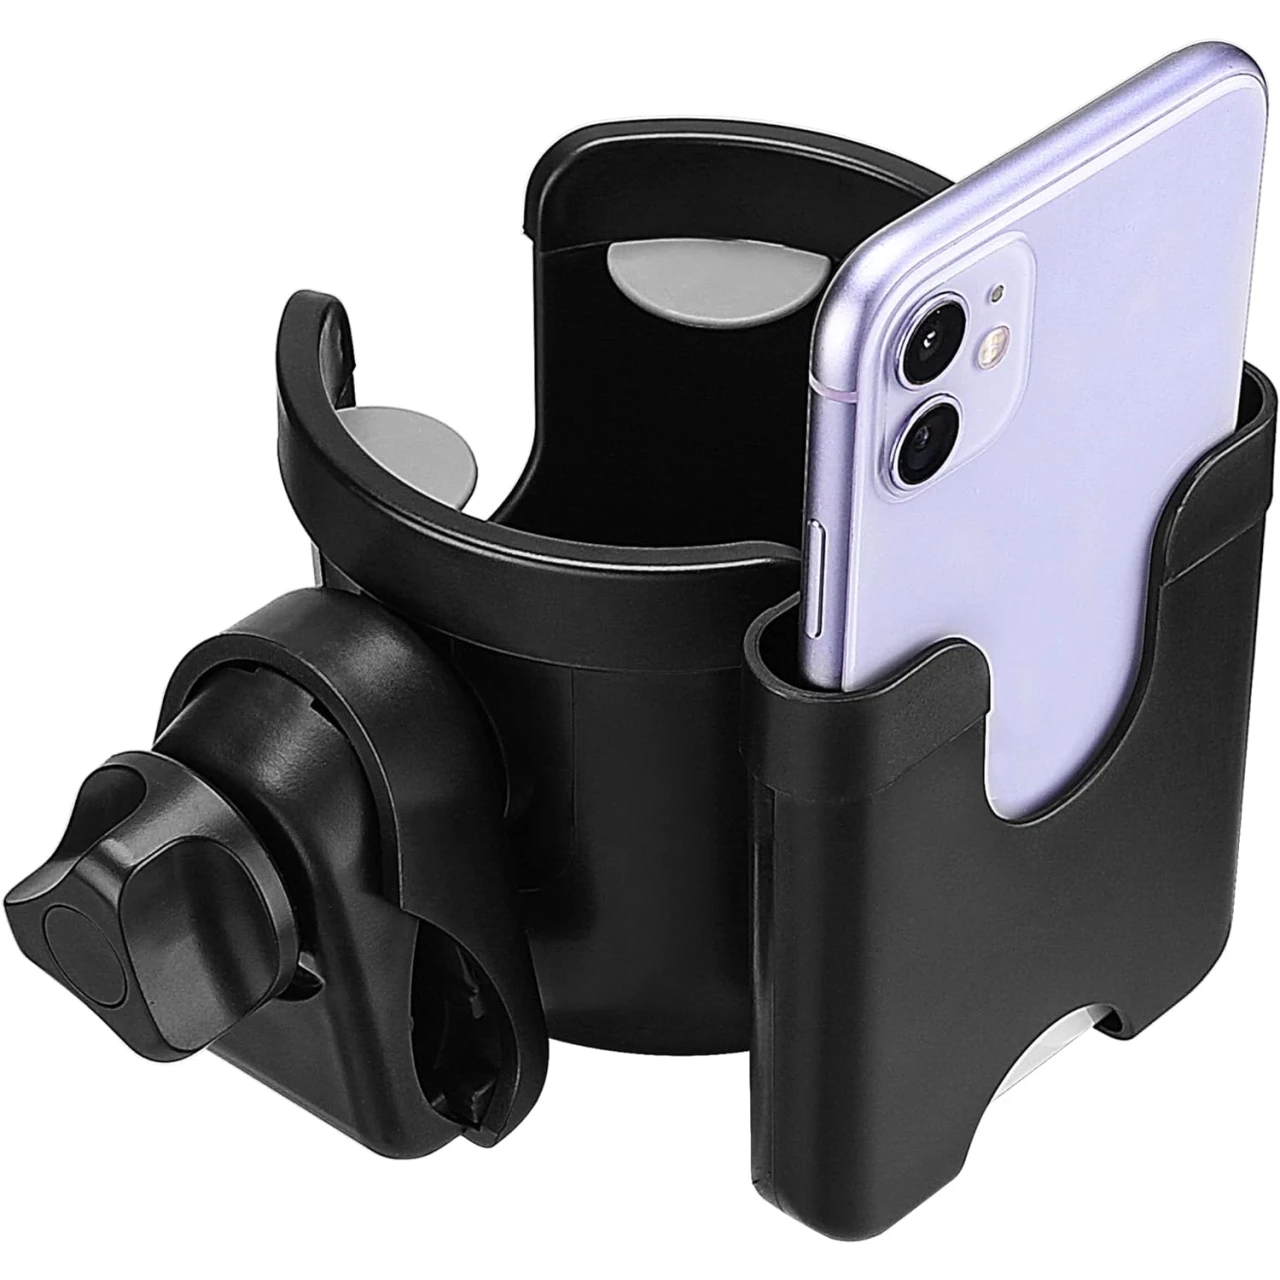 Suranew Universal Stroller Cup Holder, Adjustable Drink Holder with Phone Holder